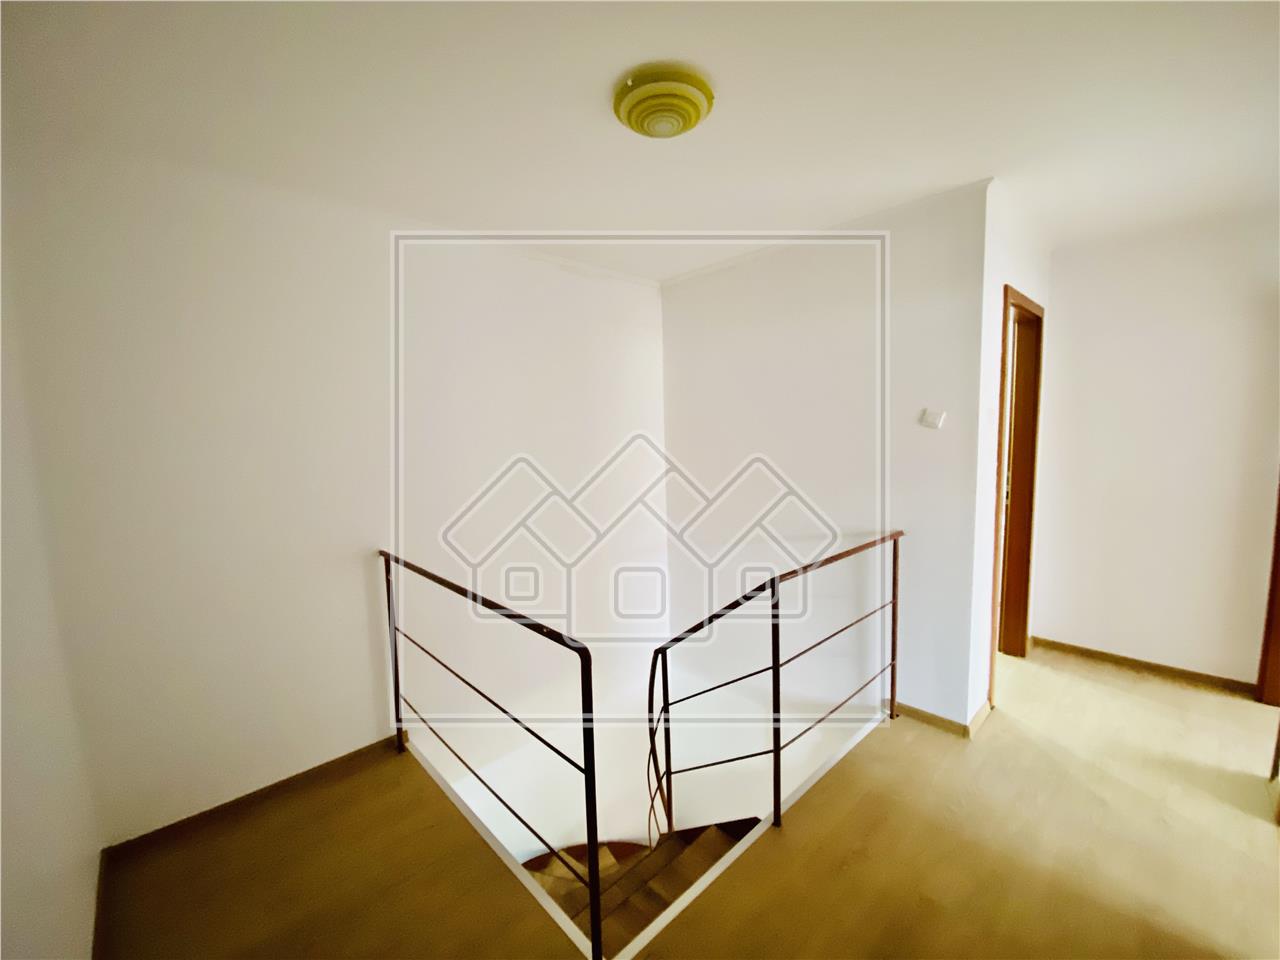 Apartament de vanzare in Sibiu - 87 mp + balcon - Zona Rahovei